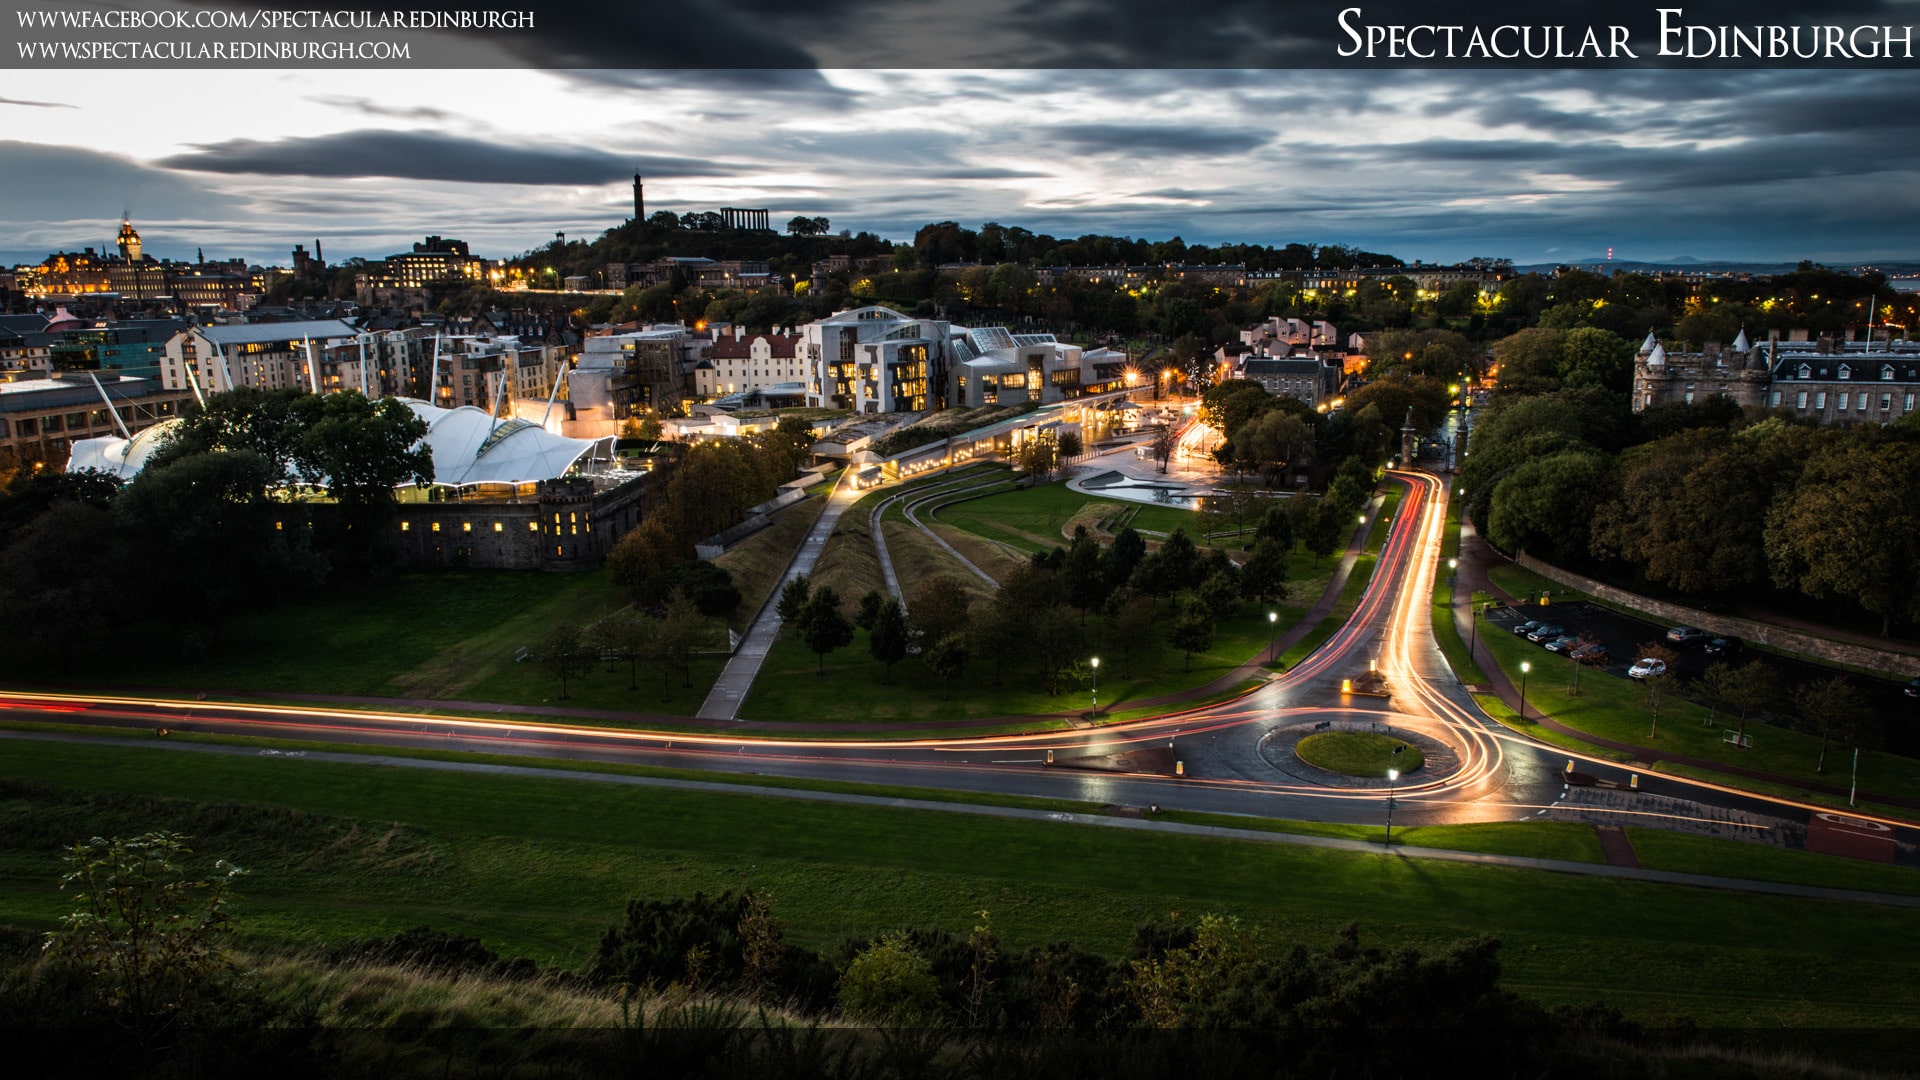 Wallpaper 3 - Light Trails at Holyrood - Spectacular Edinburgh Photography